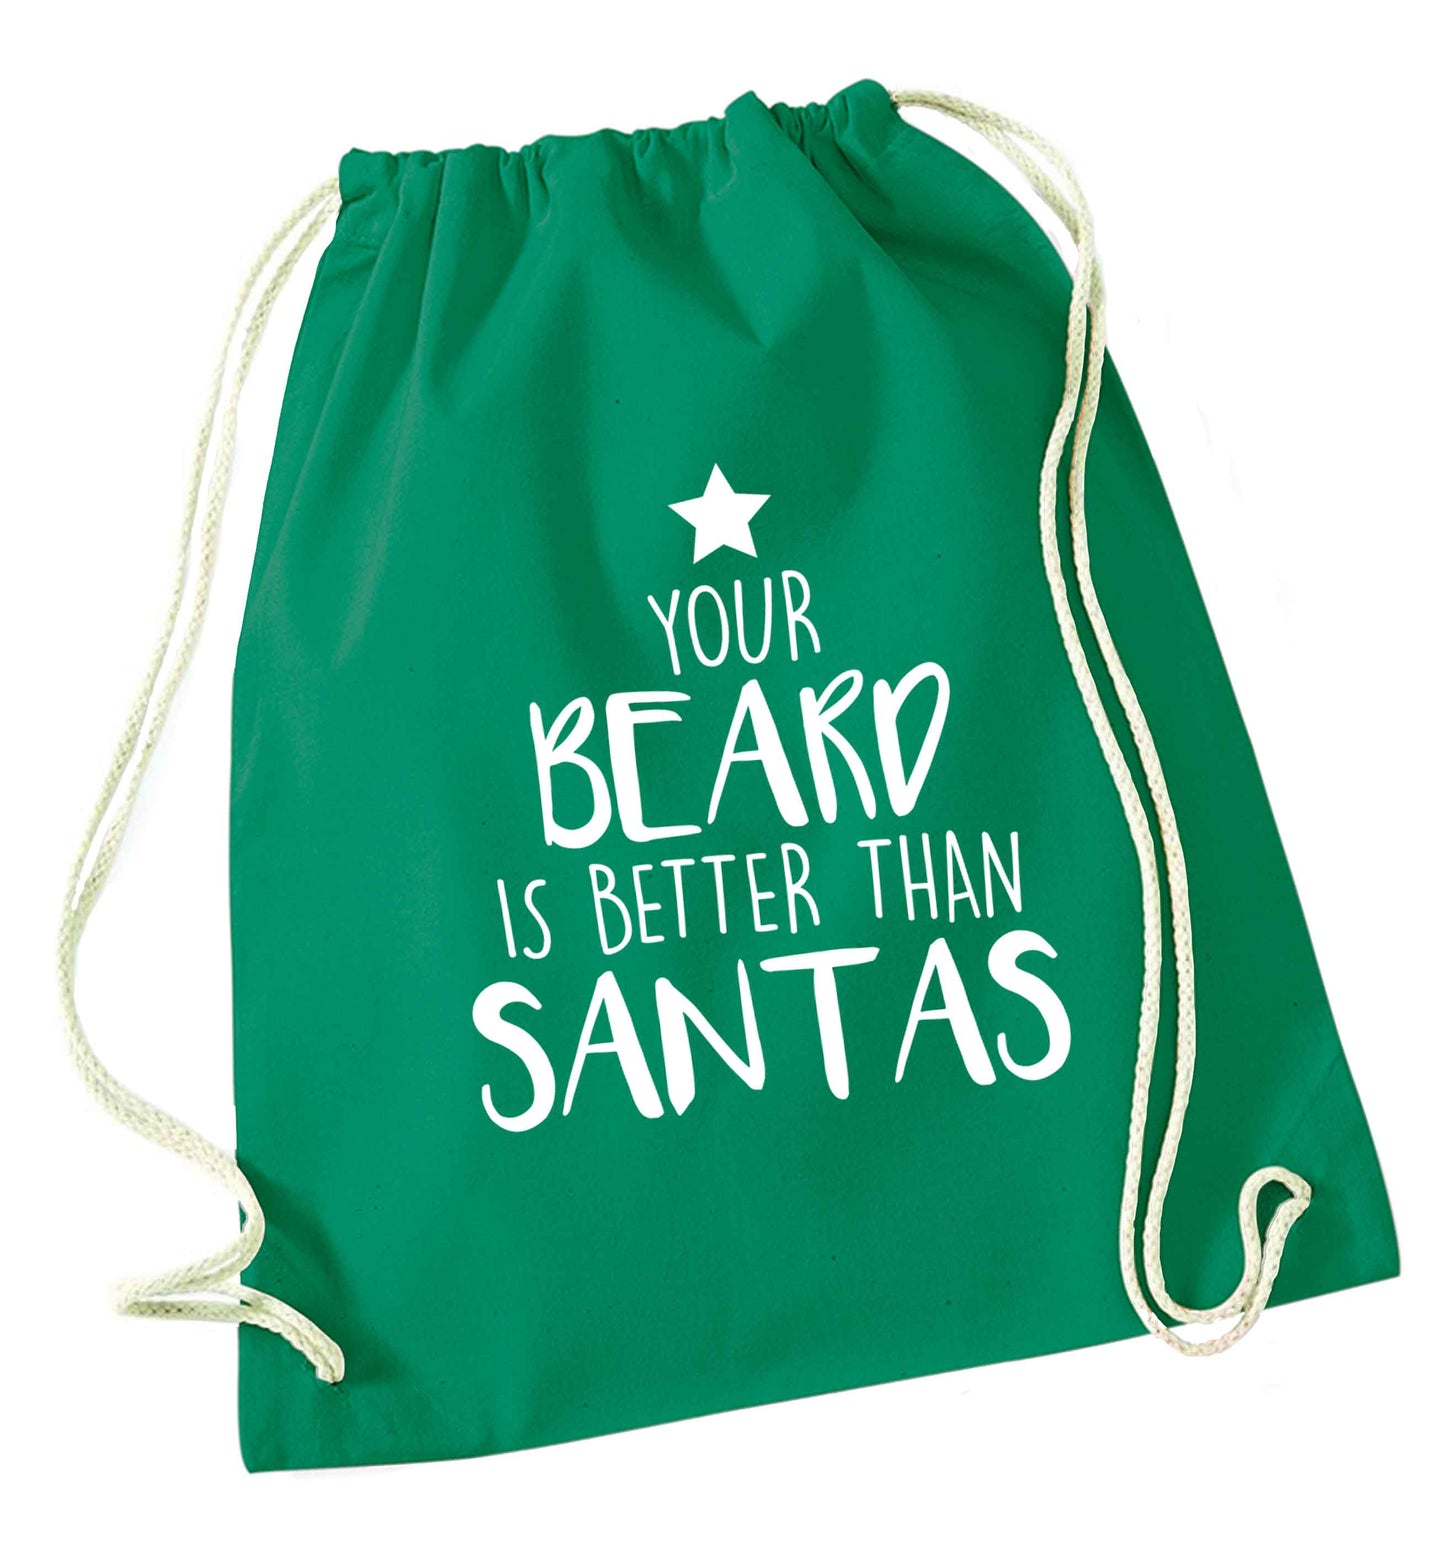 Your Beard Better than Santas green drawstring bag